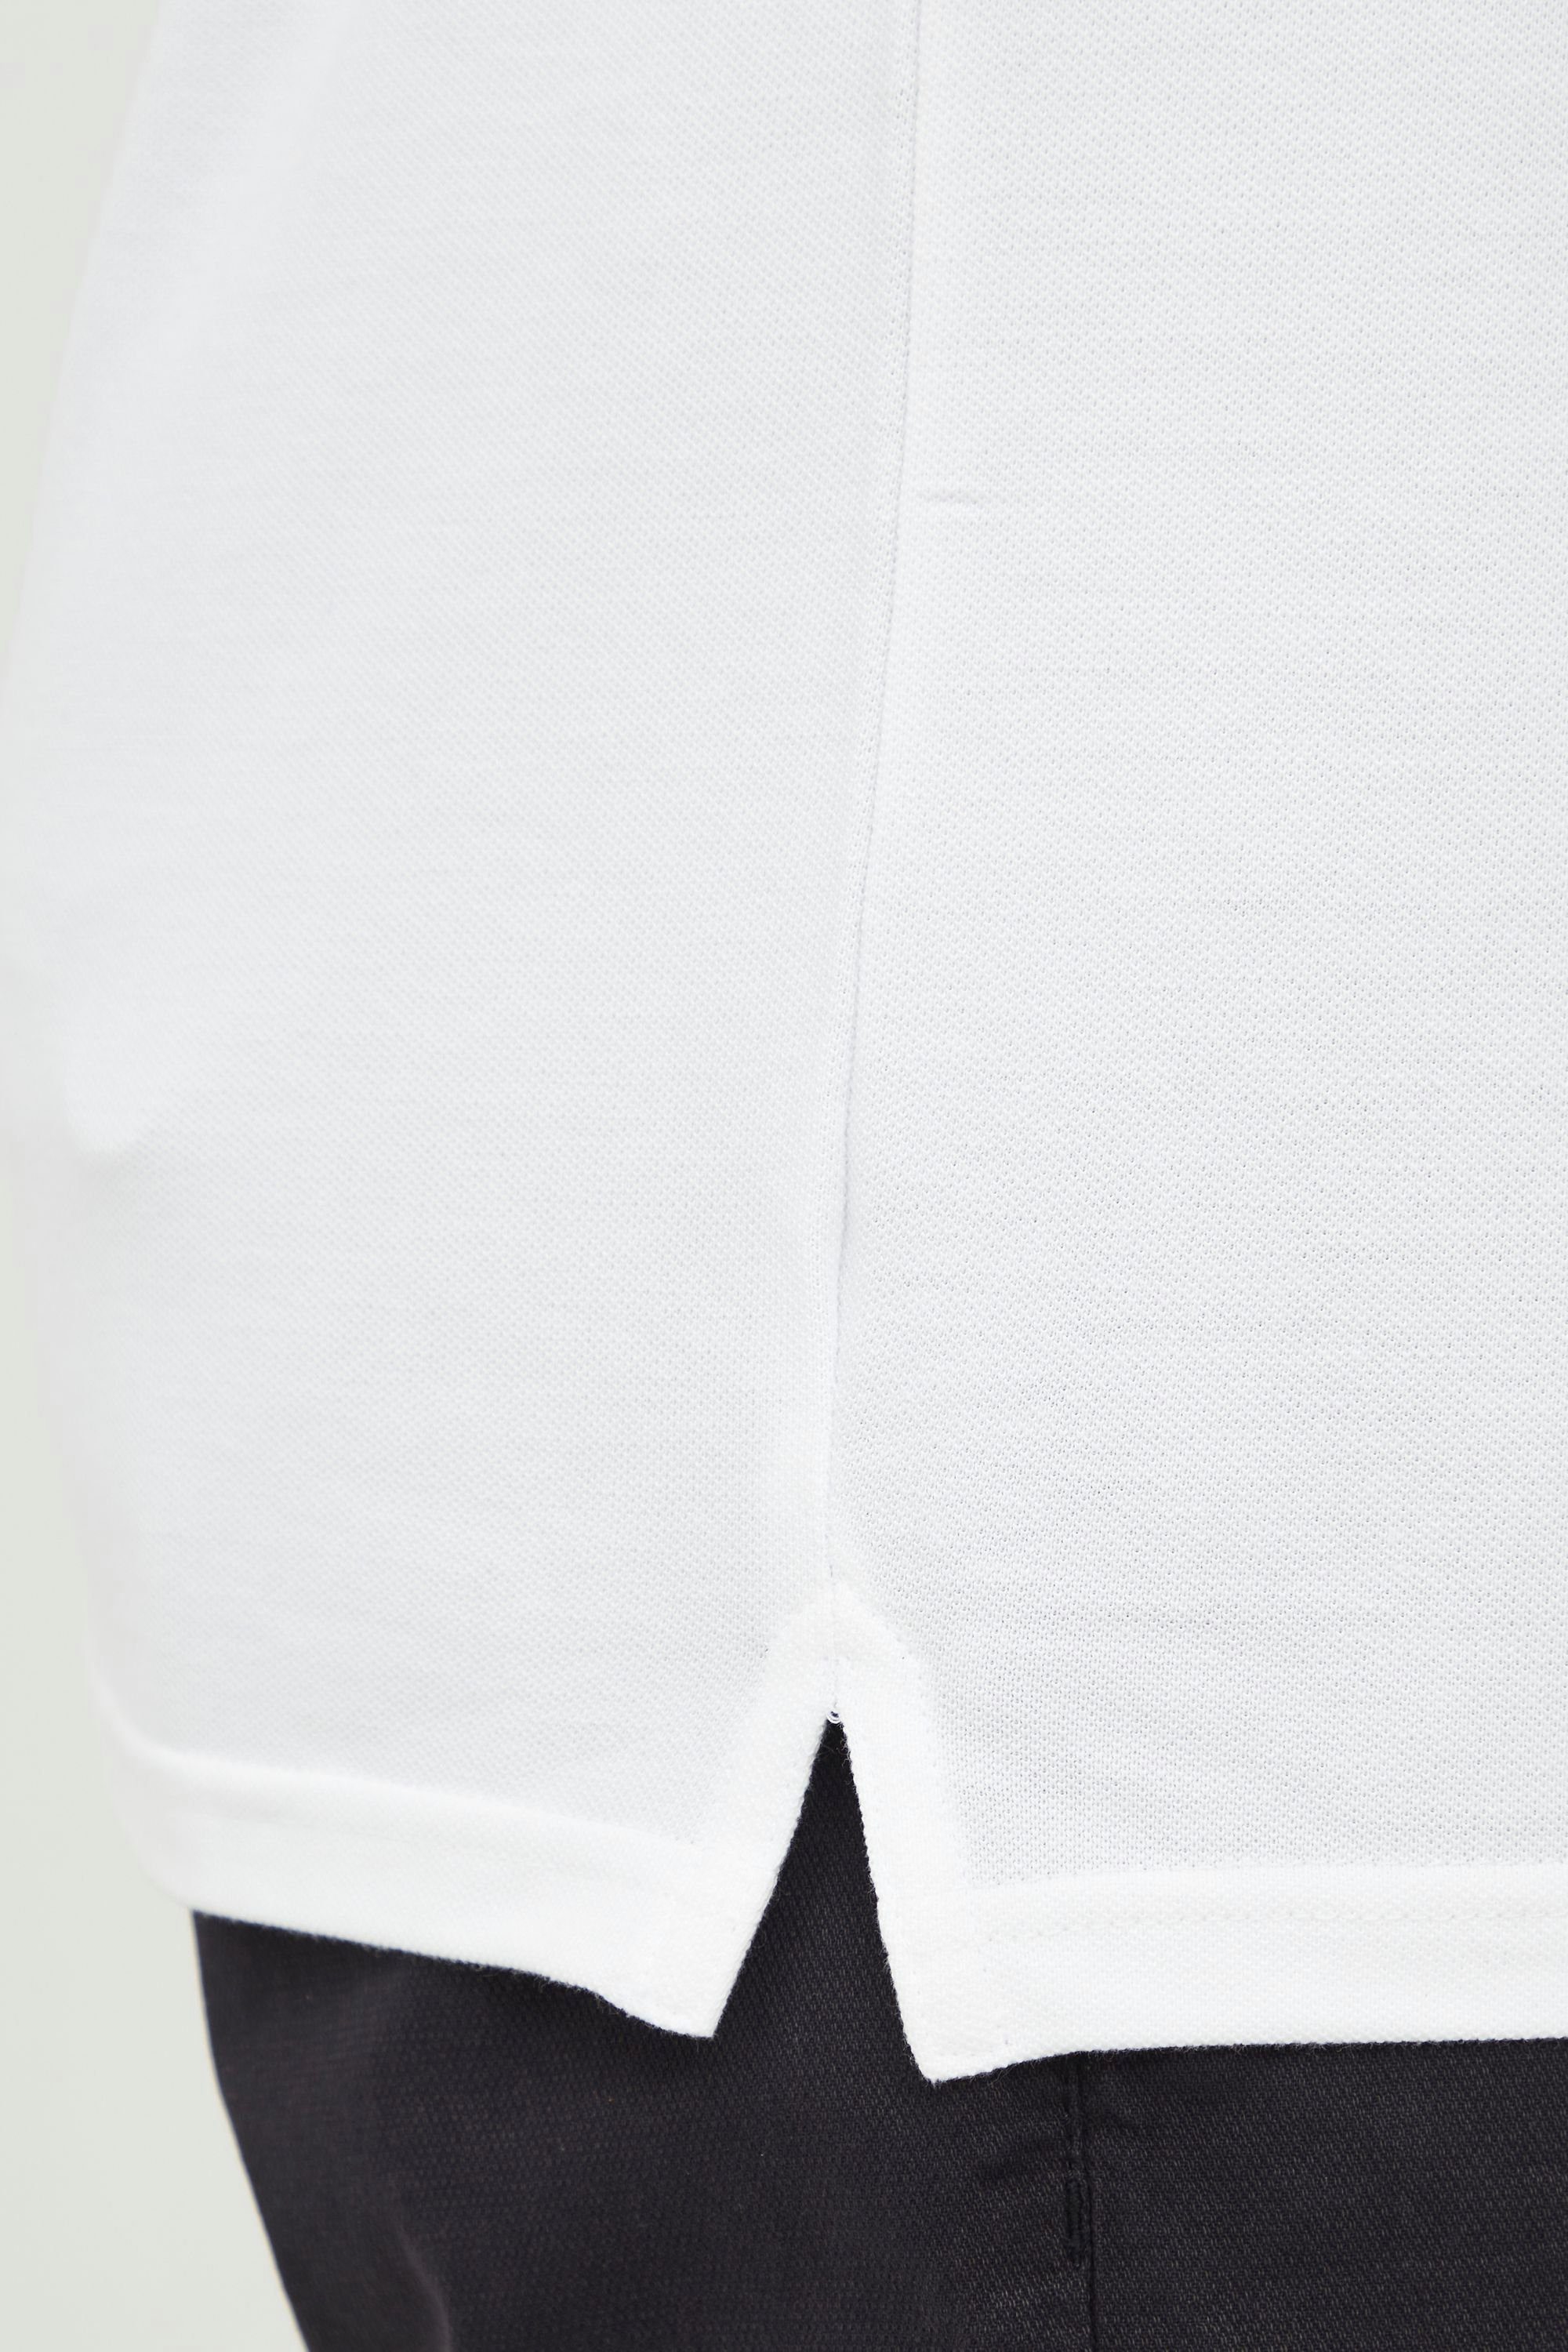 Poloshirt Off-White Poloshirt im klassischen IDRebbert (002) Schnitt Indicode